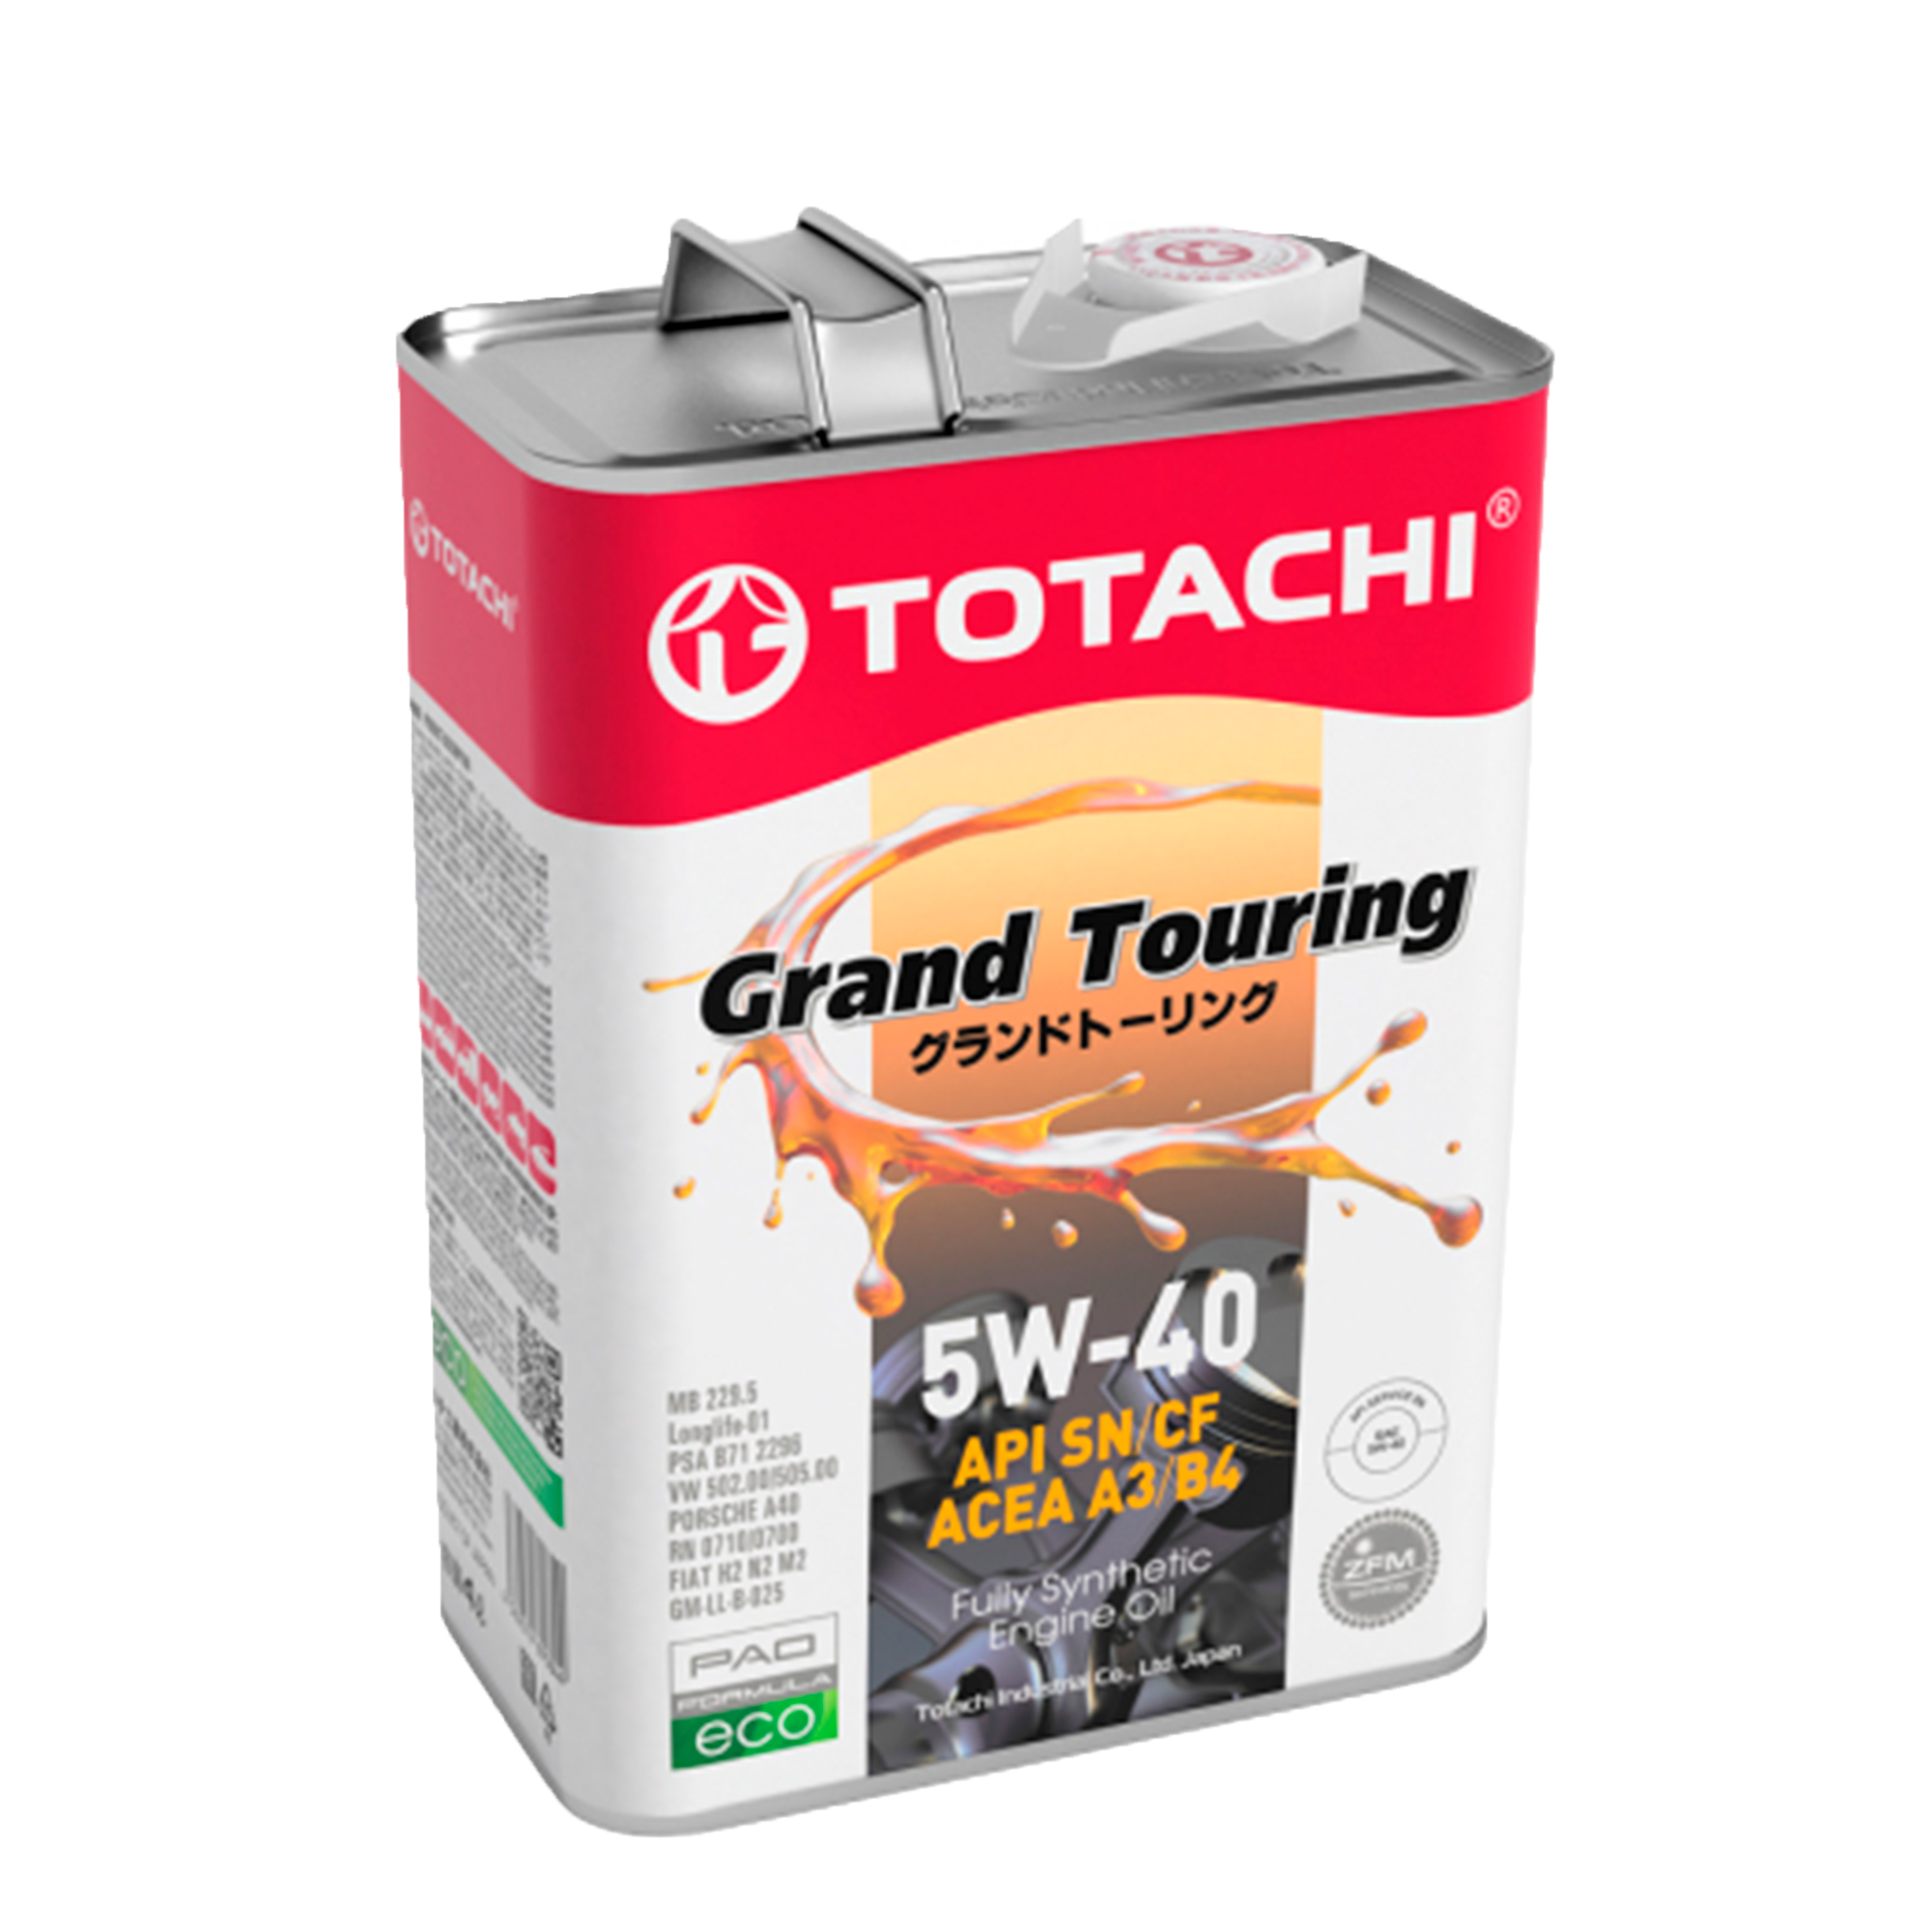 Grand touring 5w 40. TOTACHI Grand Touring 5w40. TOTACHI Hyper ECODRIVE fully Synthetic SP/gf-6a 5w-30. Моторное масло Тотачи 5w40. TOTACHI 5w30 синтетика.